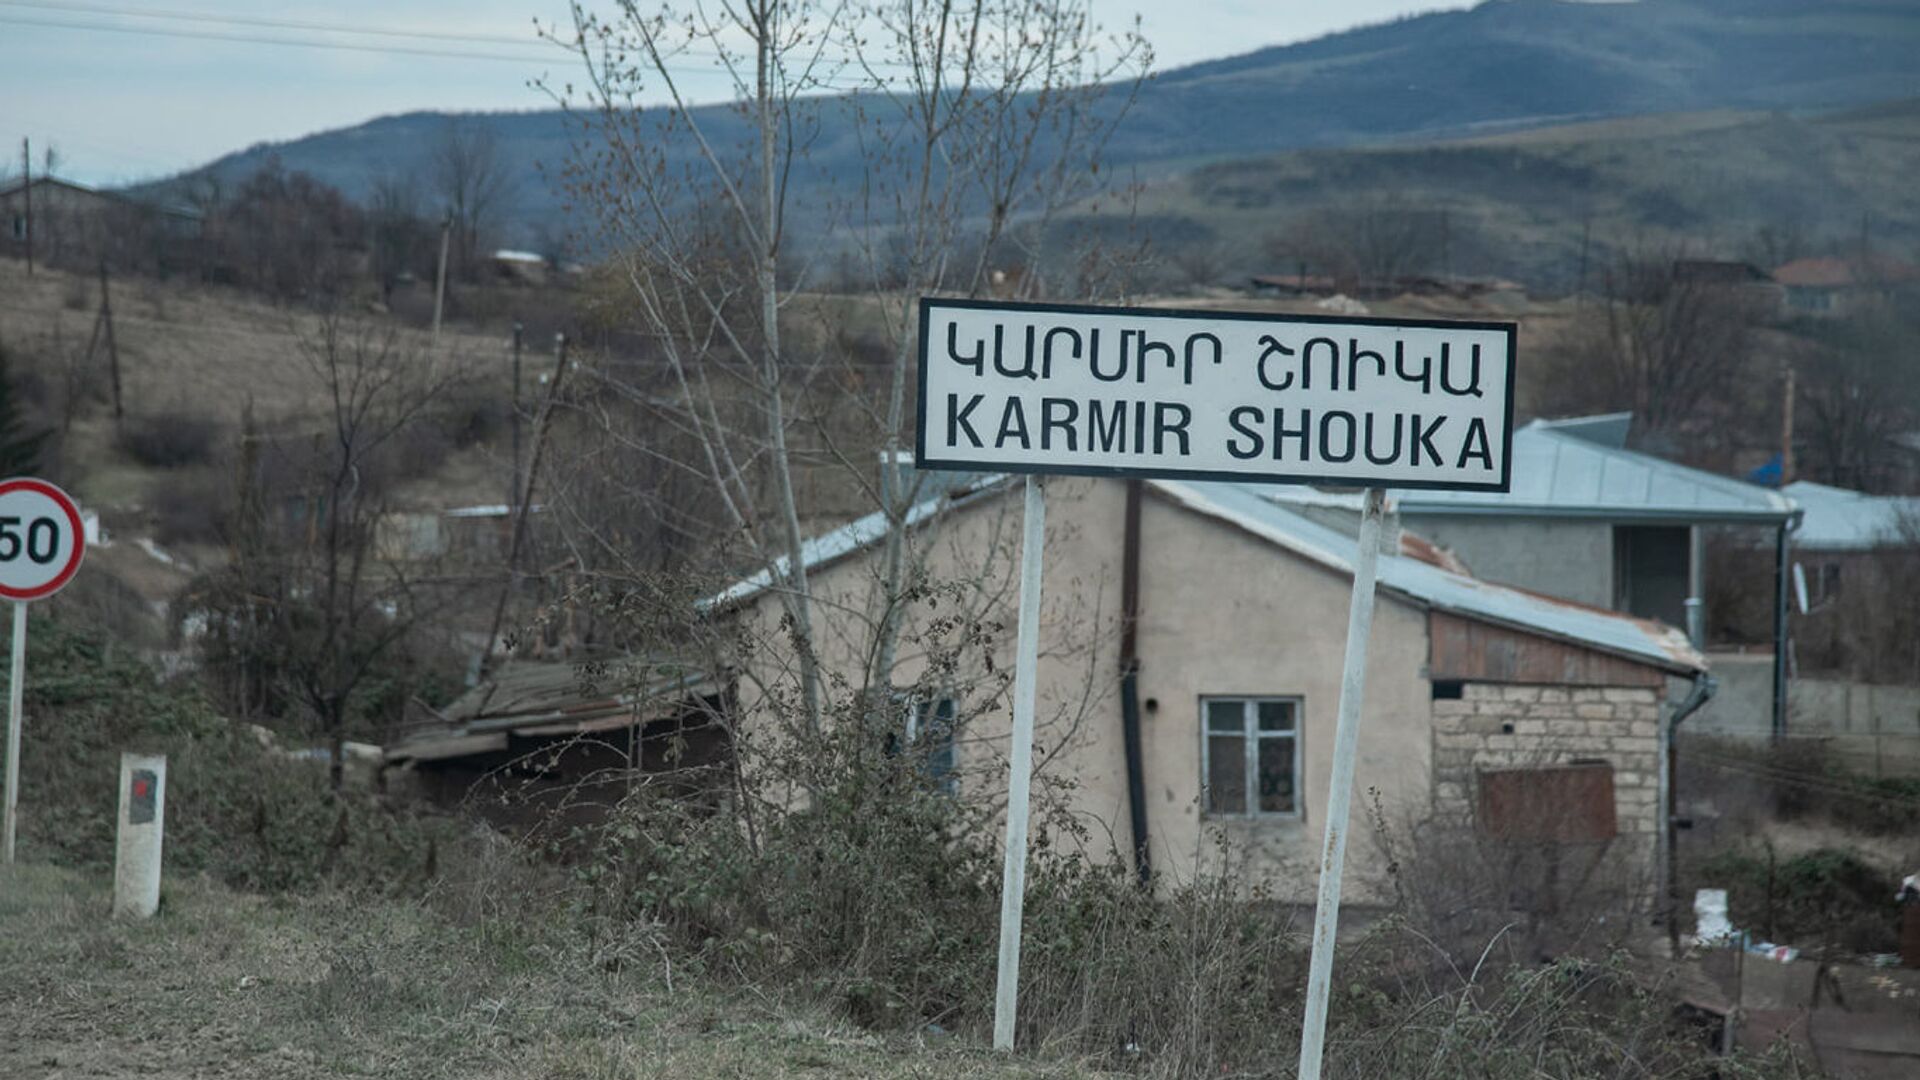 Село Кармир Шука в Карабахе - Sputnik Армения, 1920, 02.12.2021